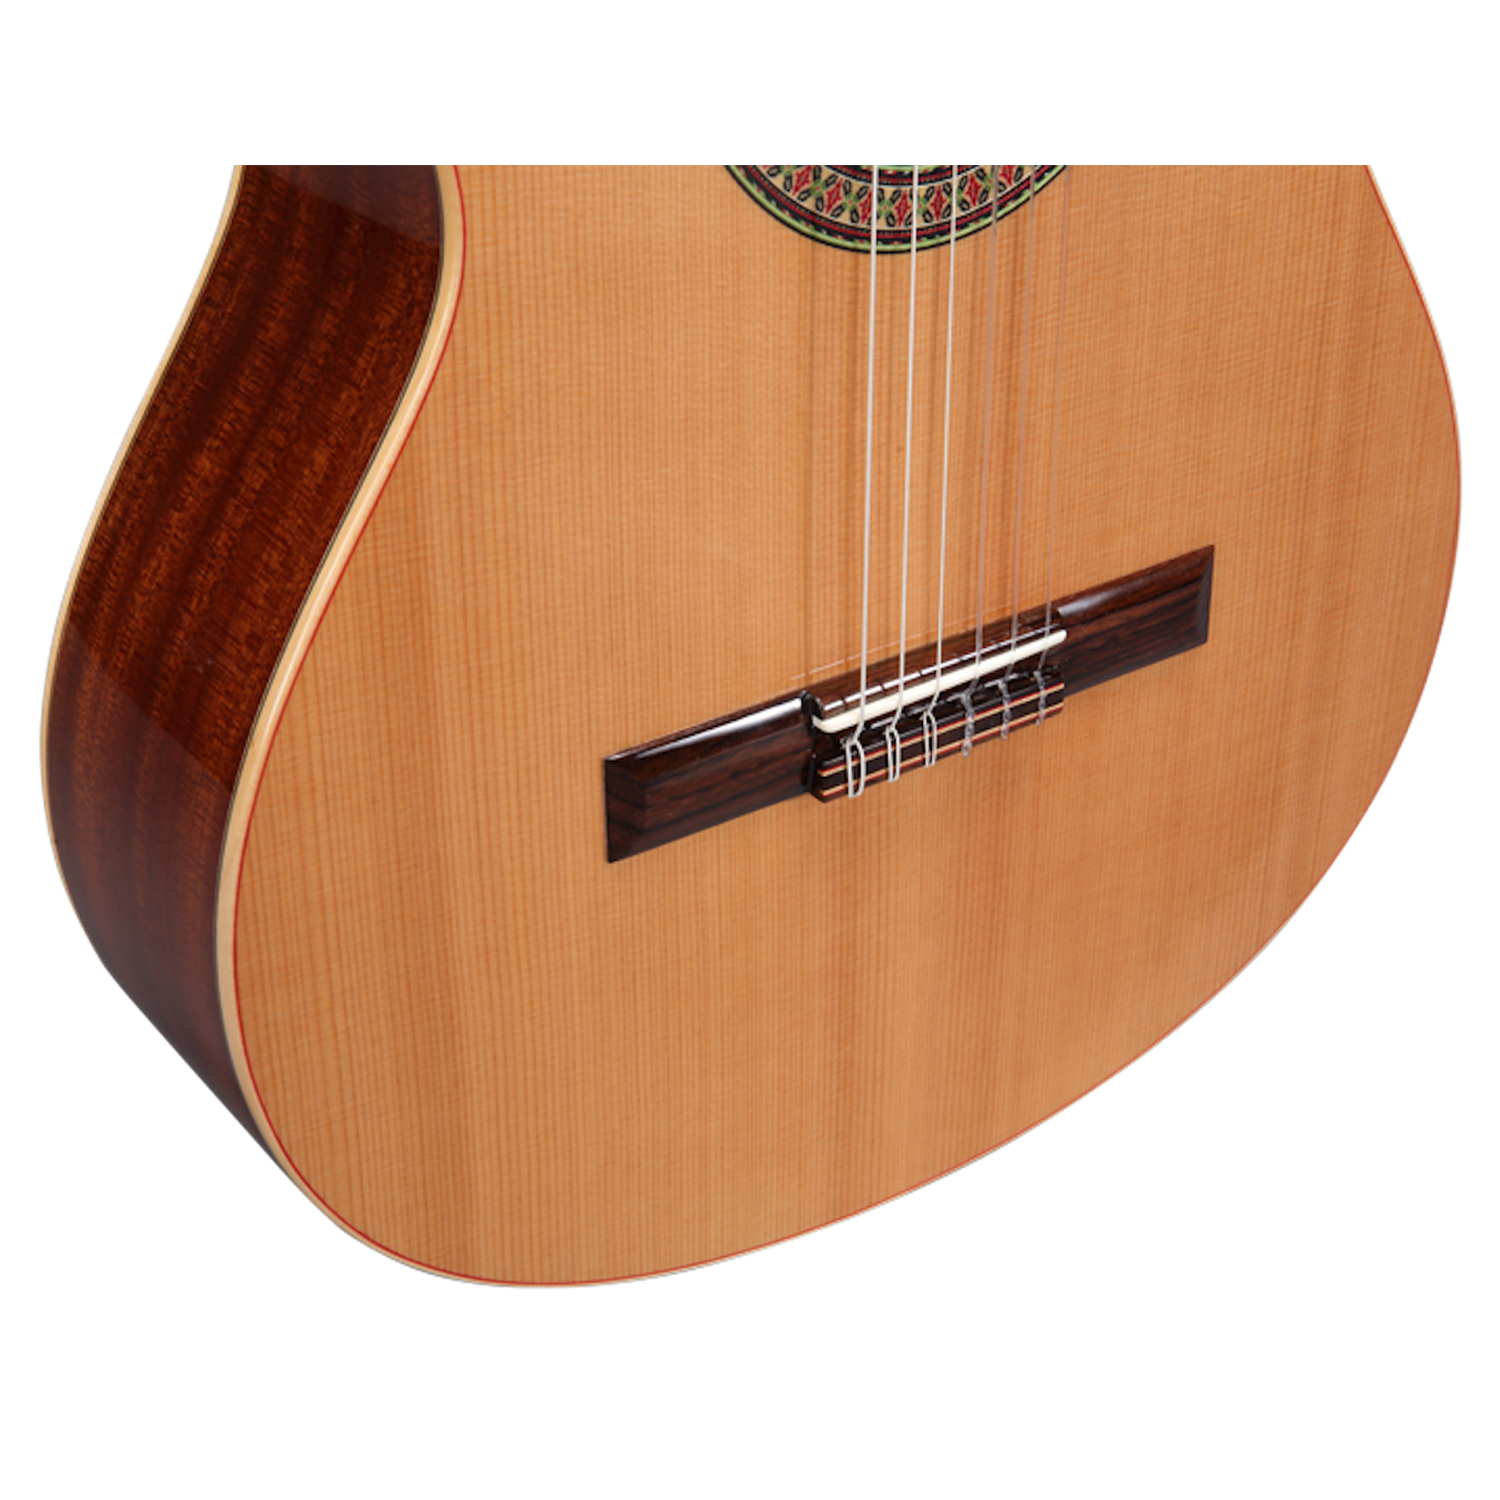 Altamira N100 Classical Guitar Solid Cedar Top